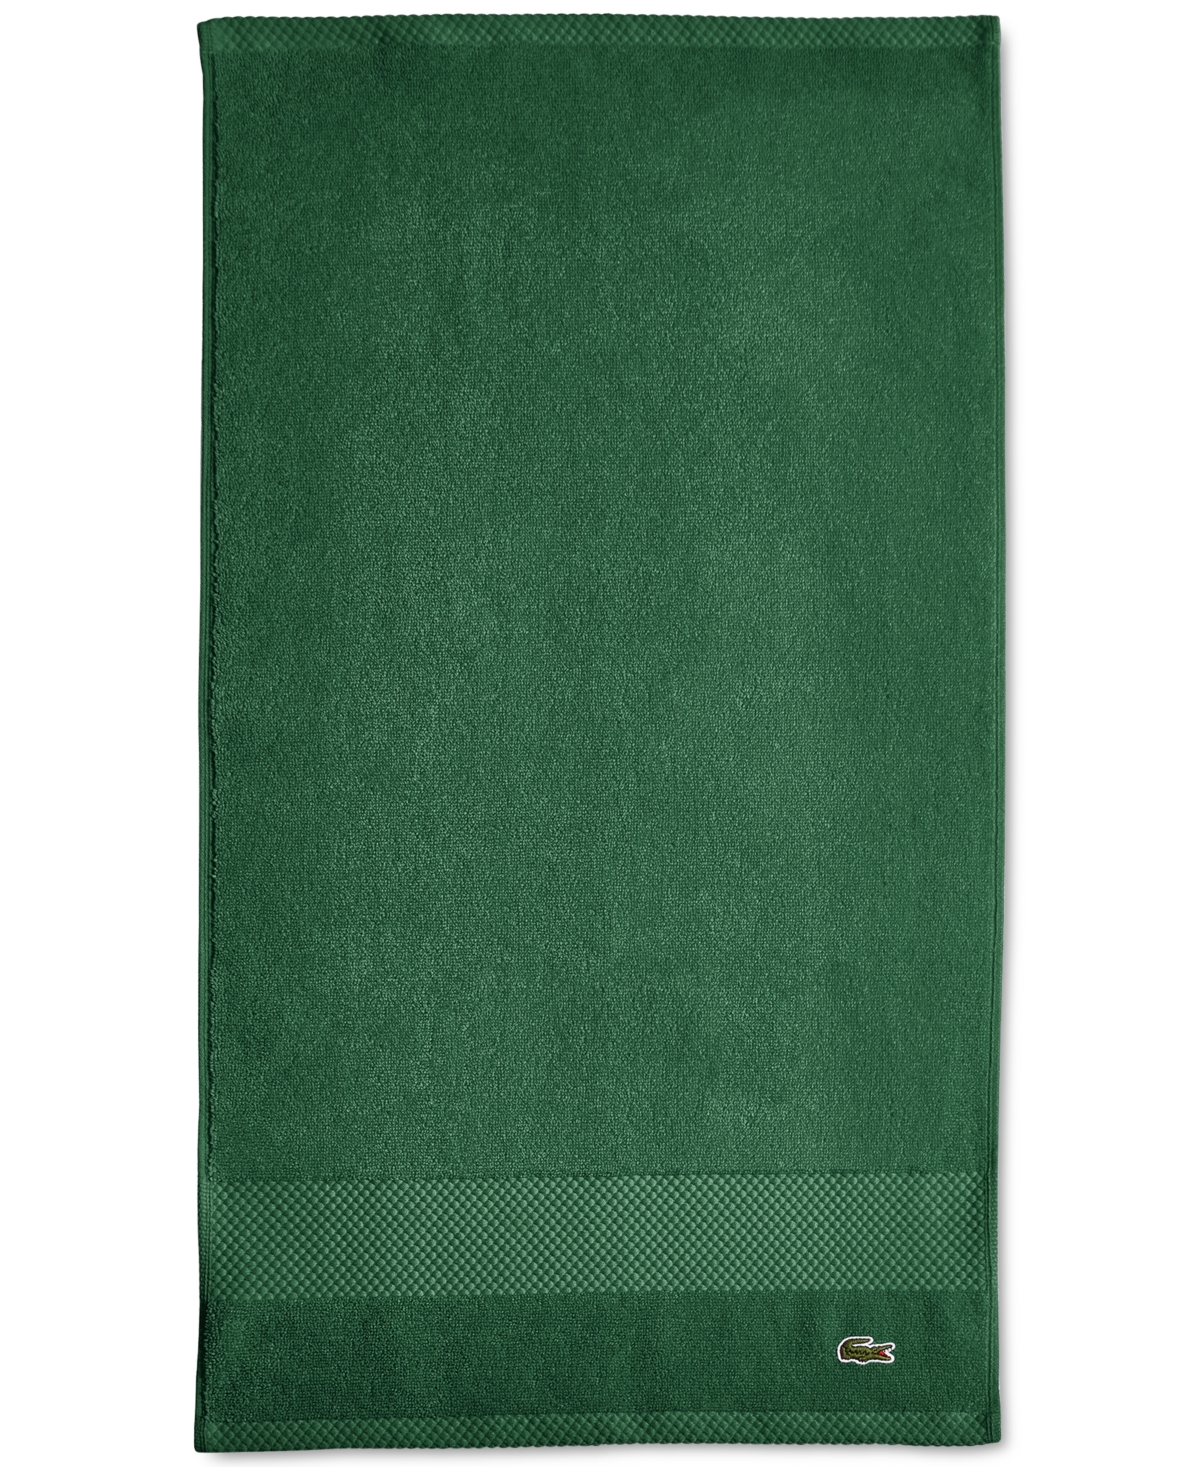 Lacoste Heritage Supima Cotton Wash Cloth, Croc Green, 13 x 13